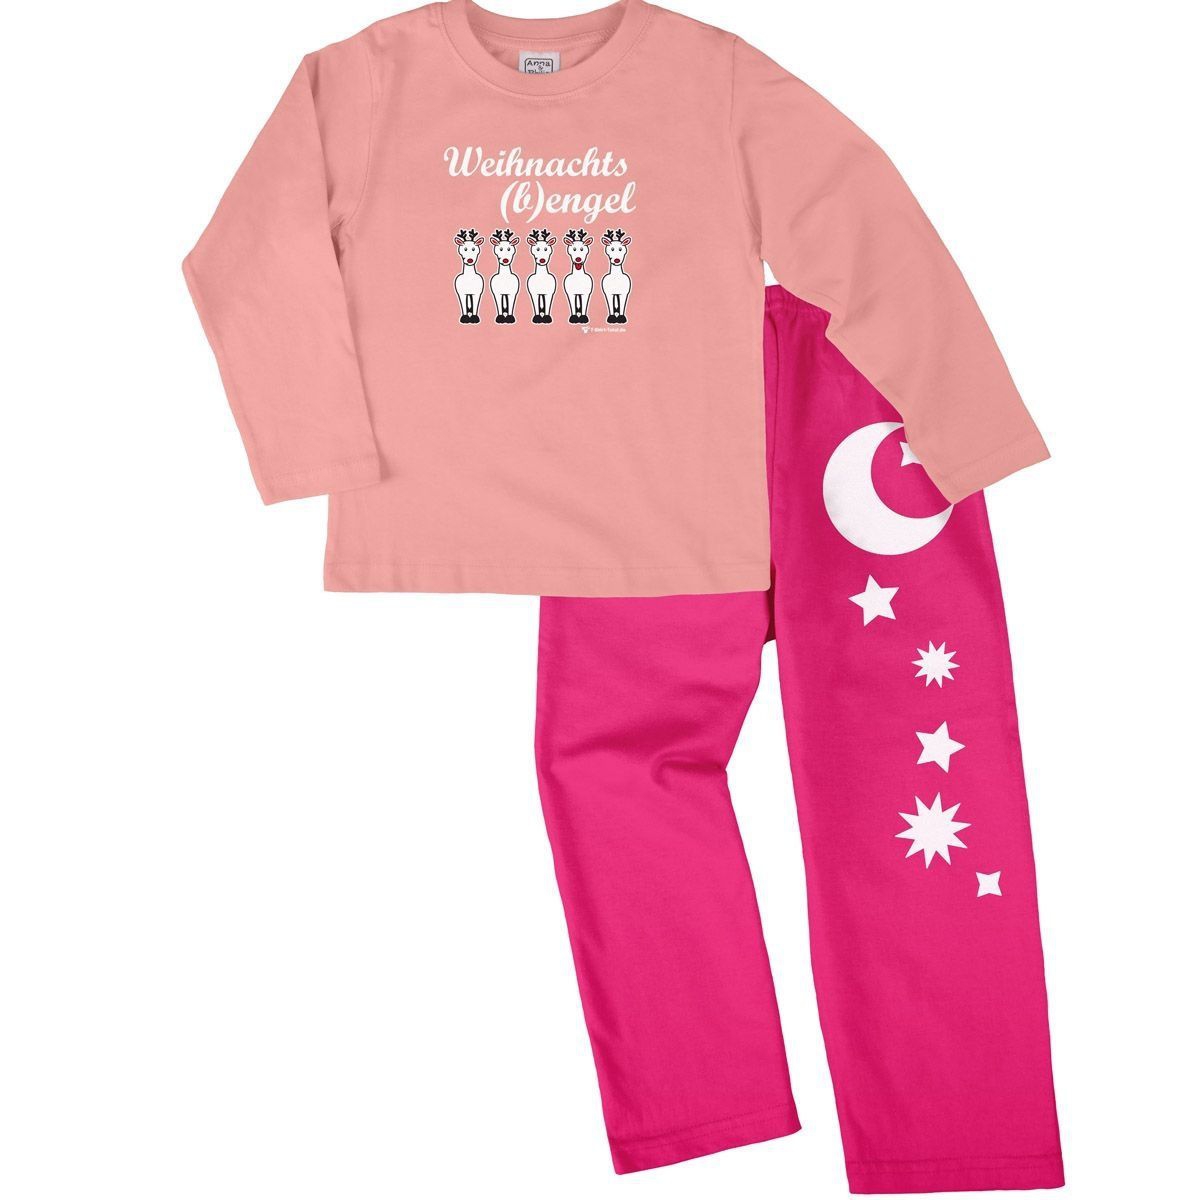 Weihnachtsbengel Pyjama Set rosa / pink 110 / 116